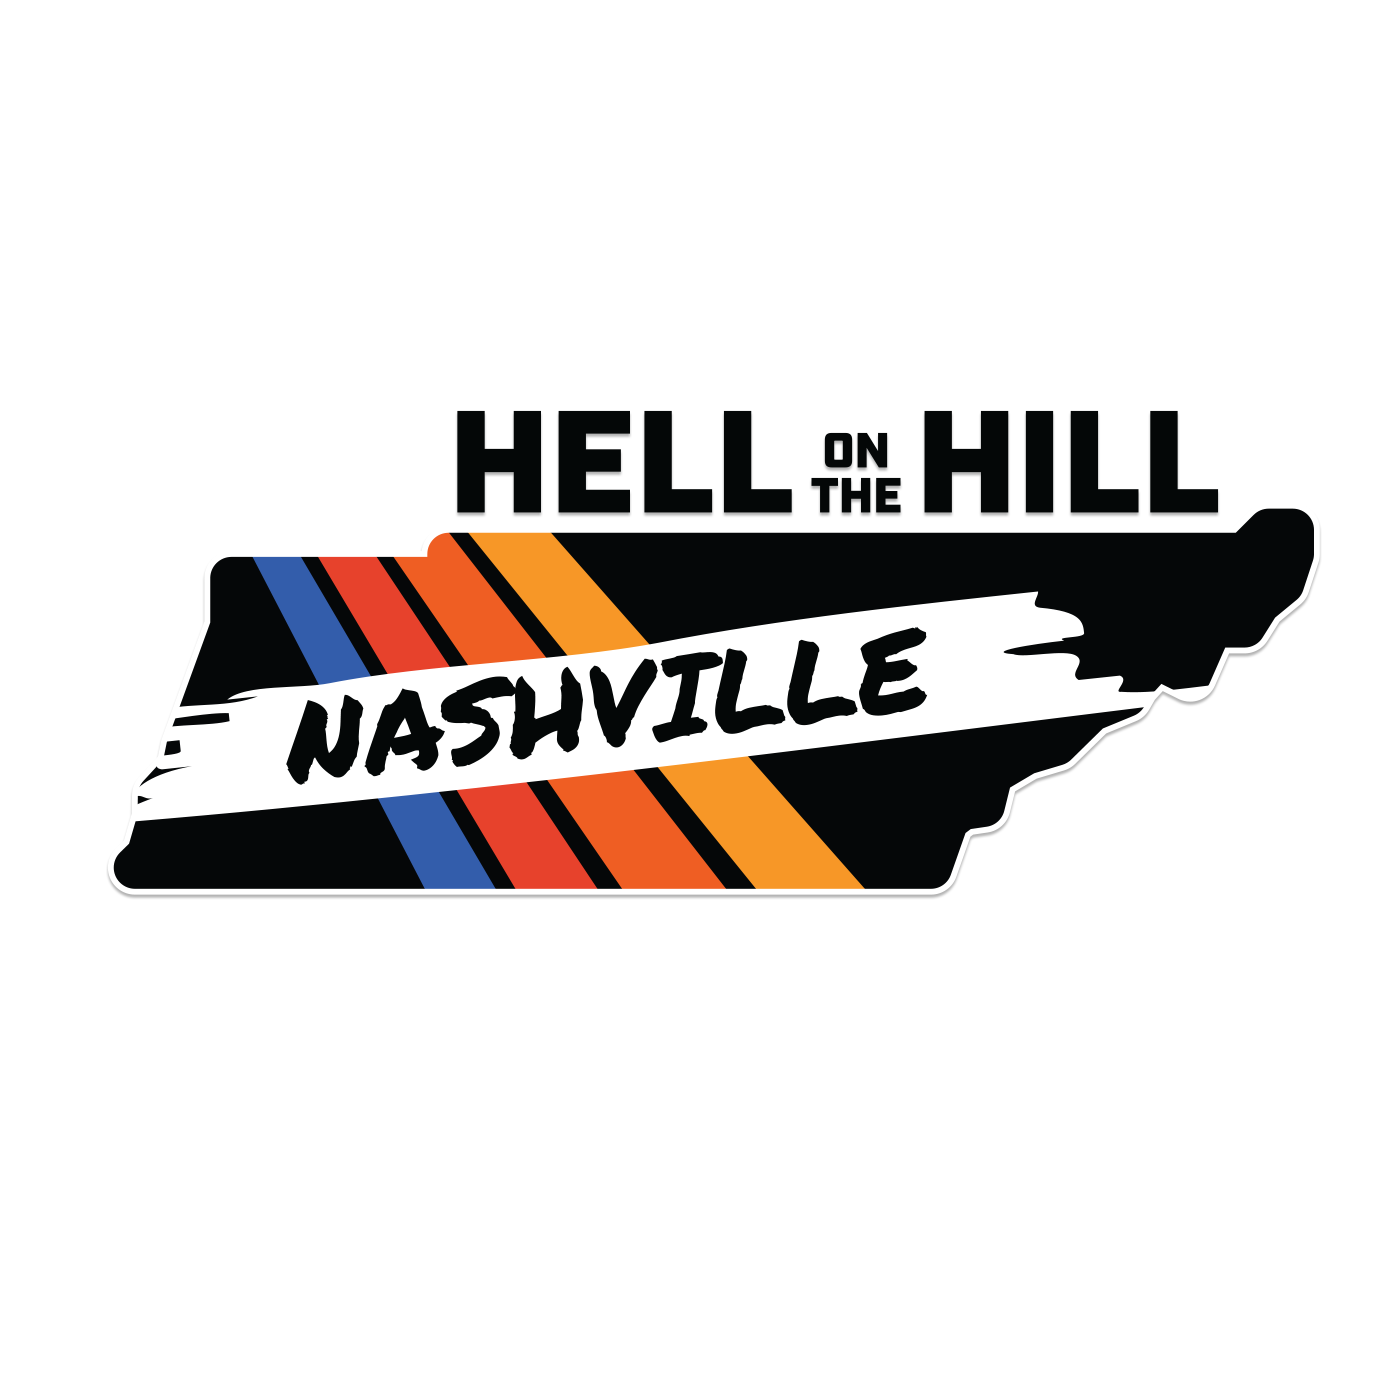 Hell on the Hill - Nashville